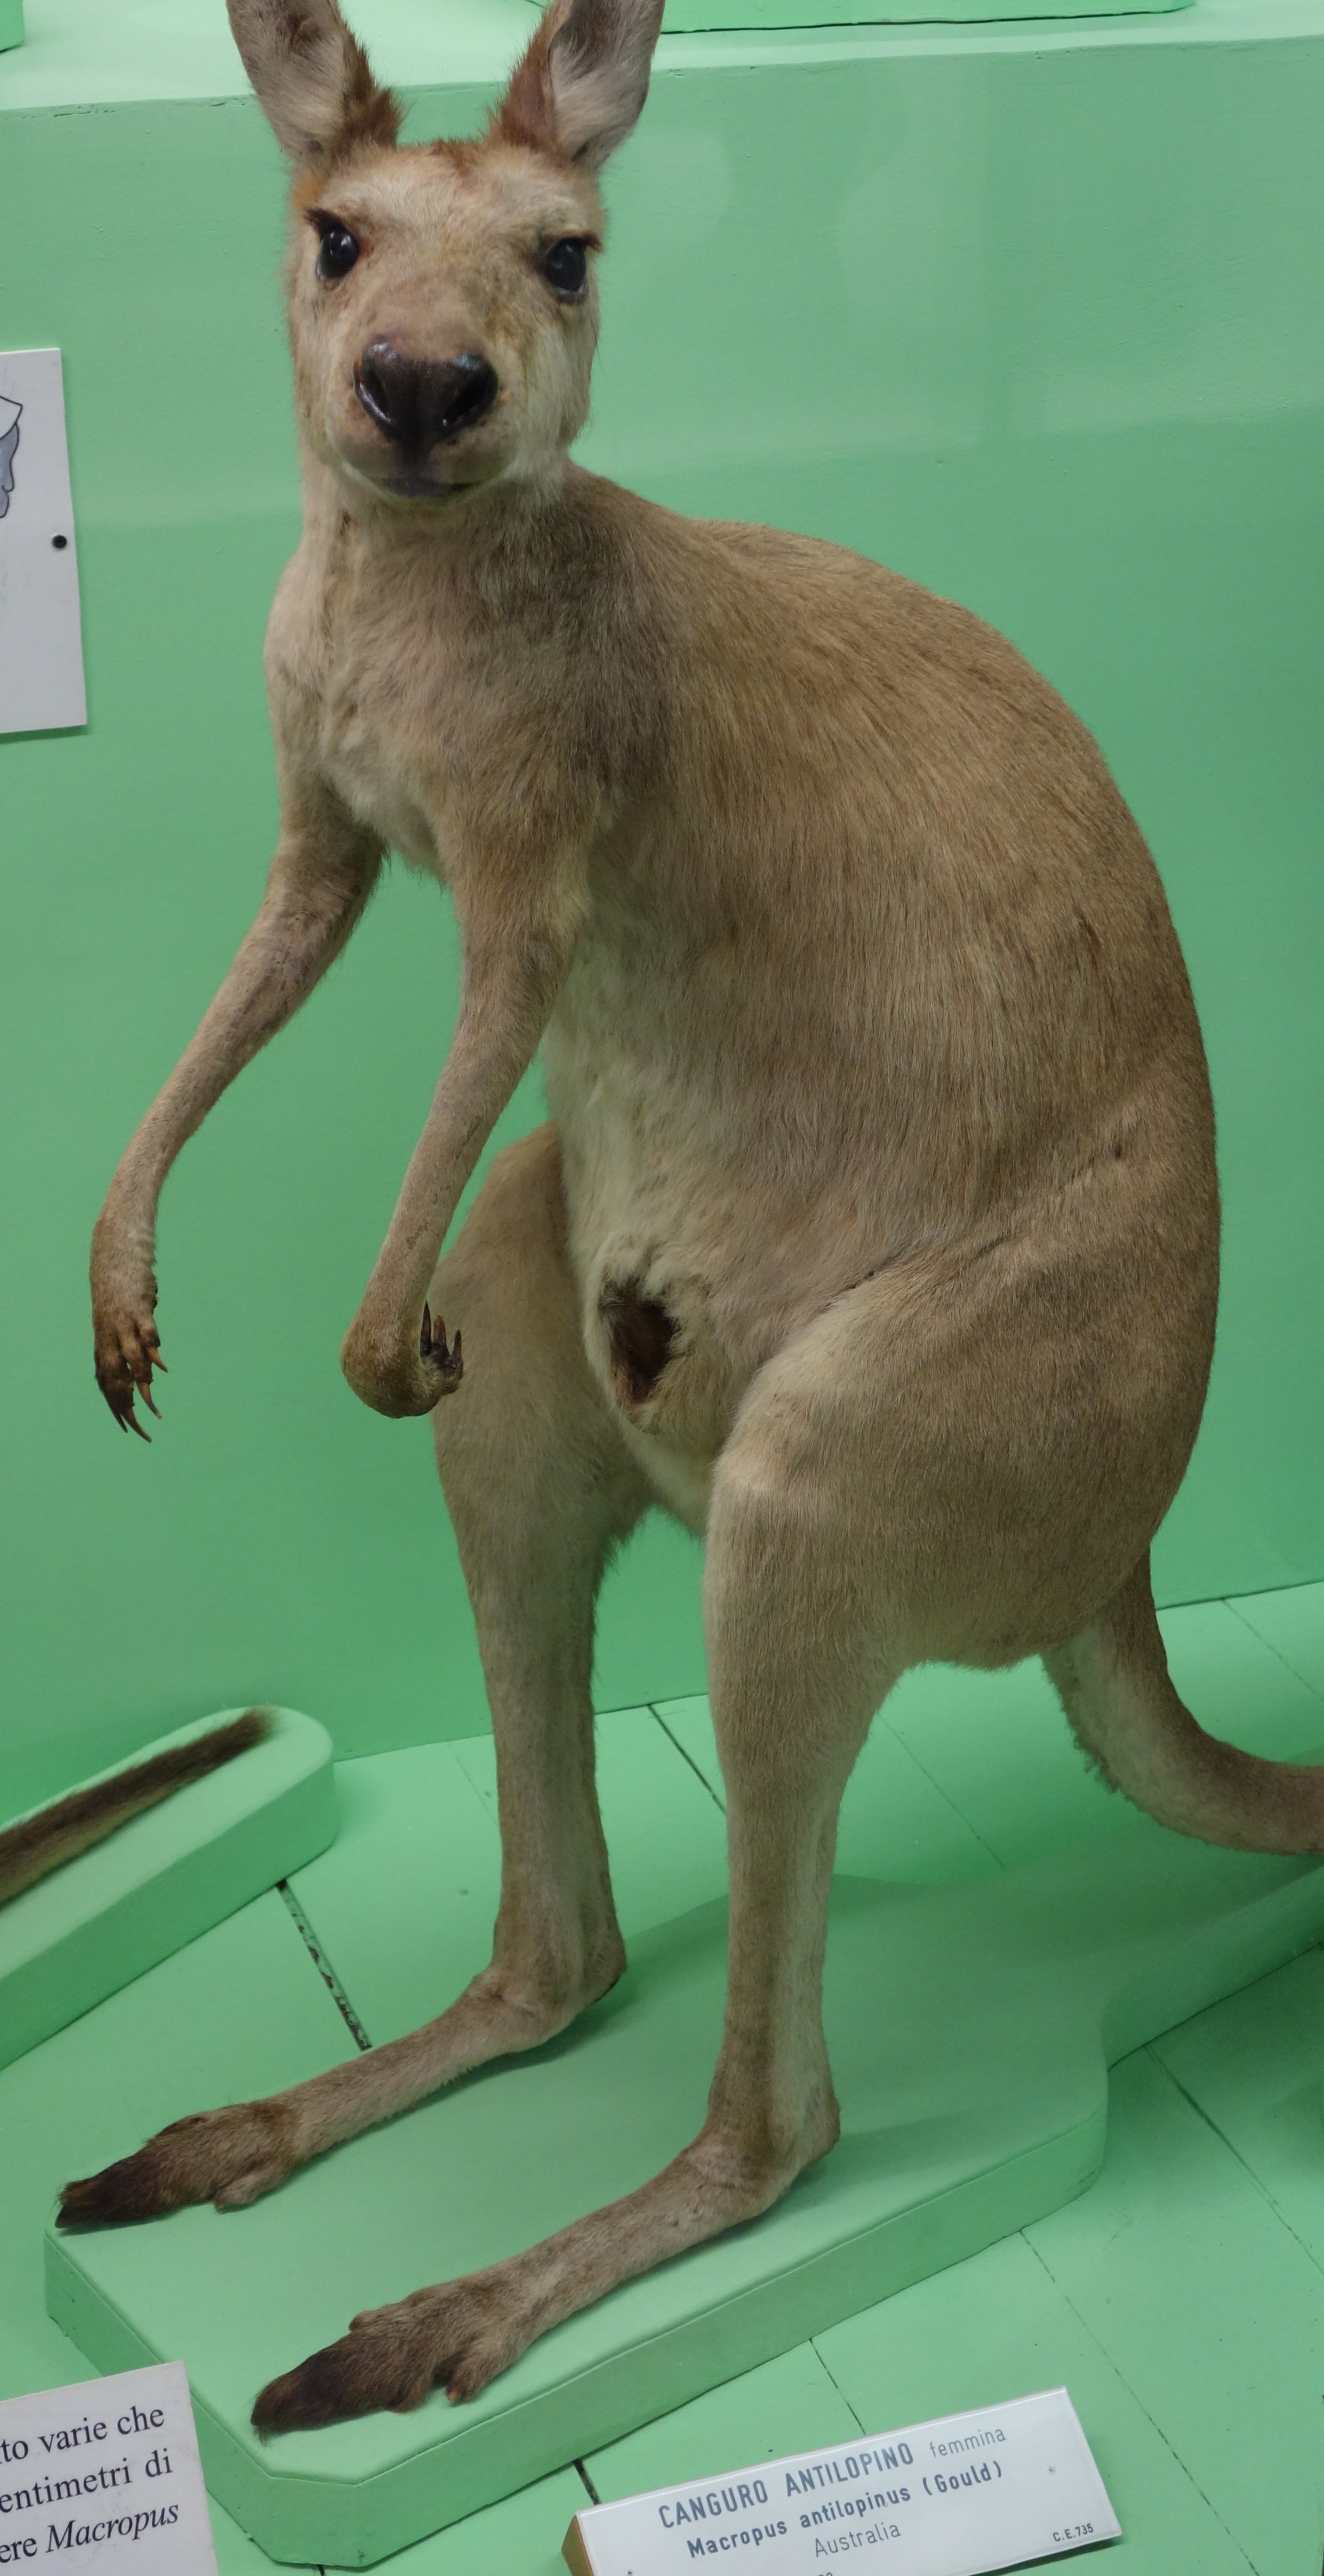 Female antilopine kangaroo (Macropus antilopinus). Exhibit in the Museo Civico di Storia Naturale di Genova, Via Brigata Liguria, 9, 16121, Genoa, Italy. Photo taken on September 26, 2013.